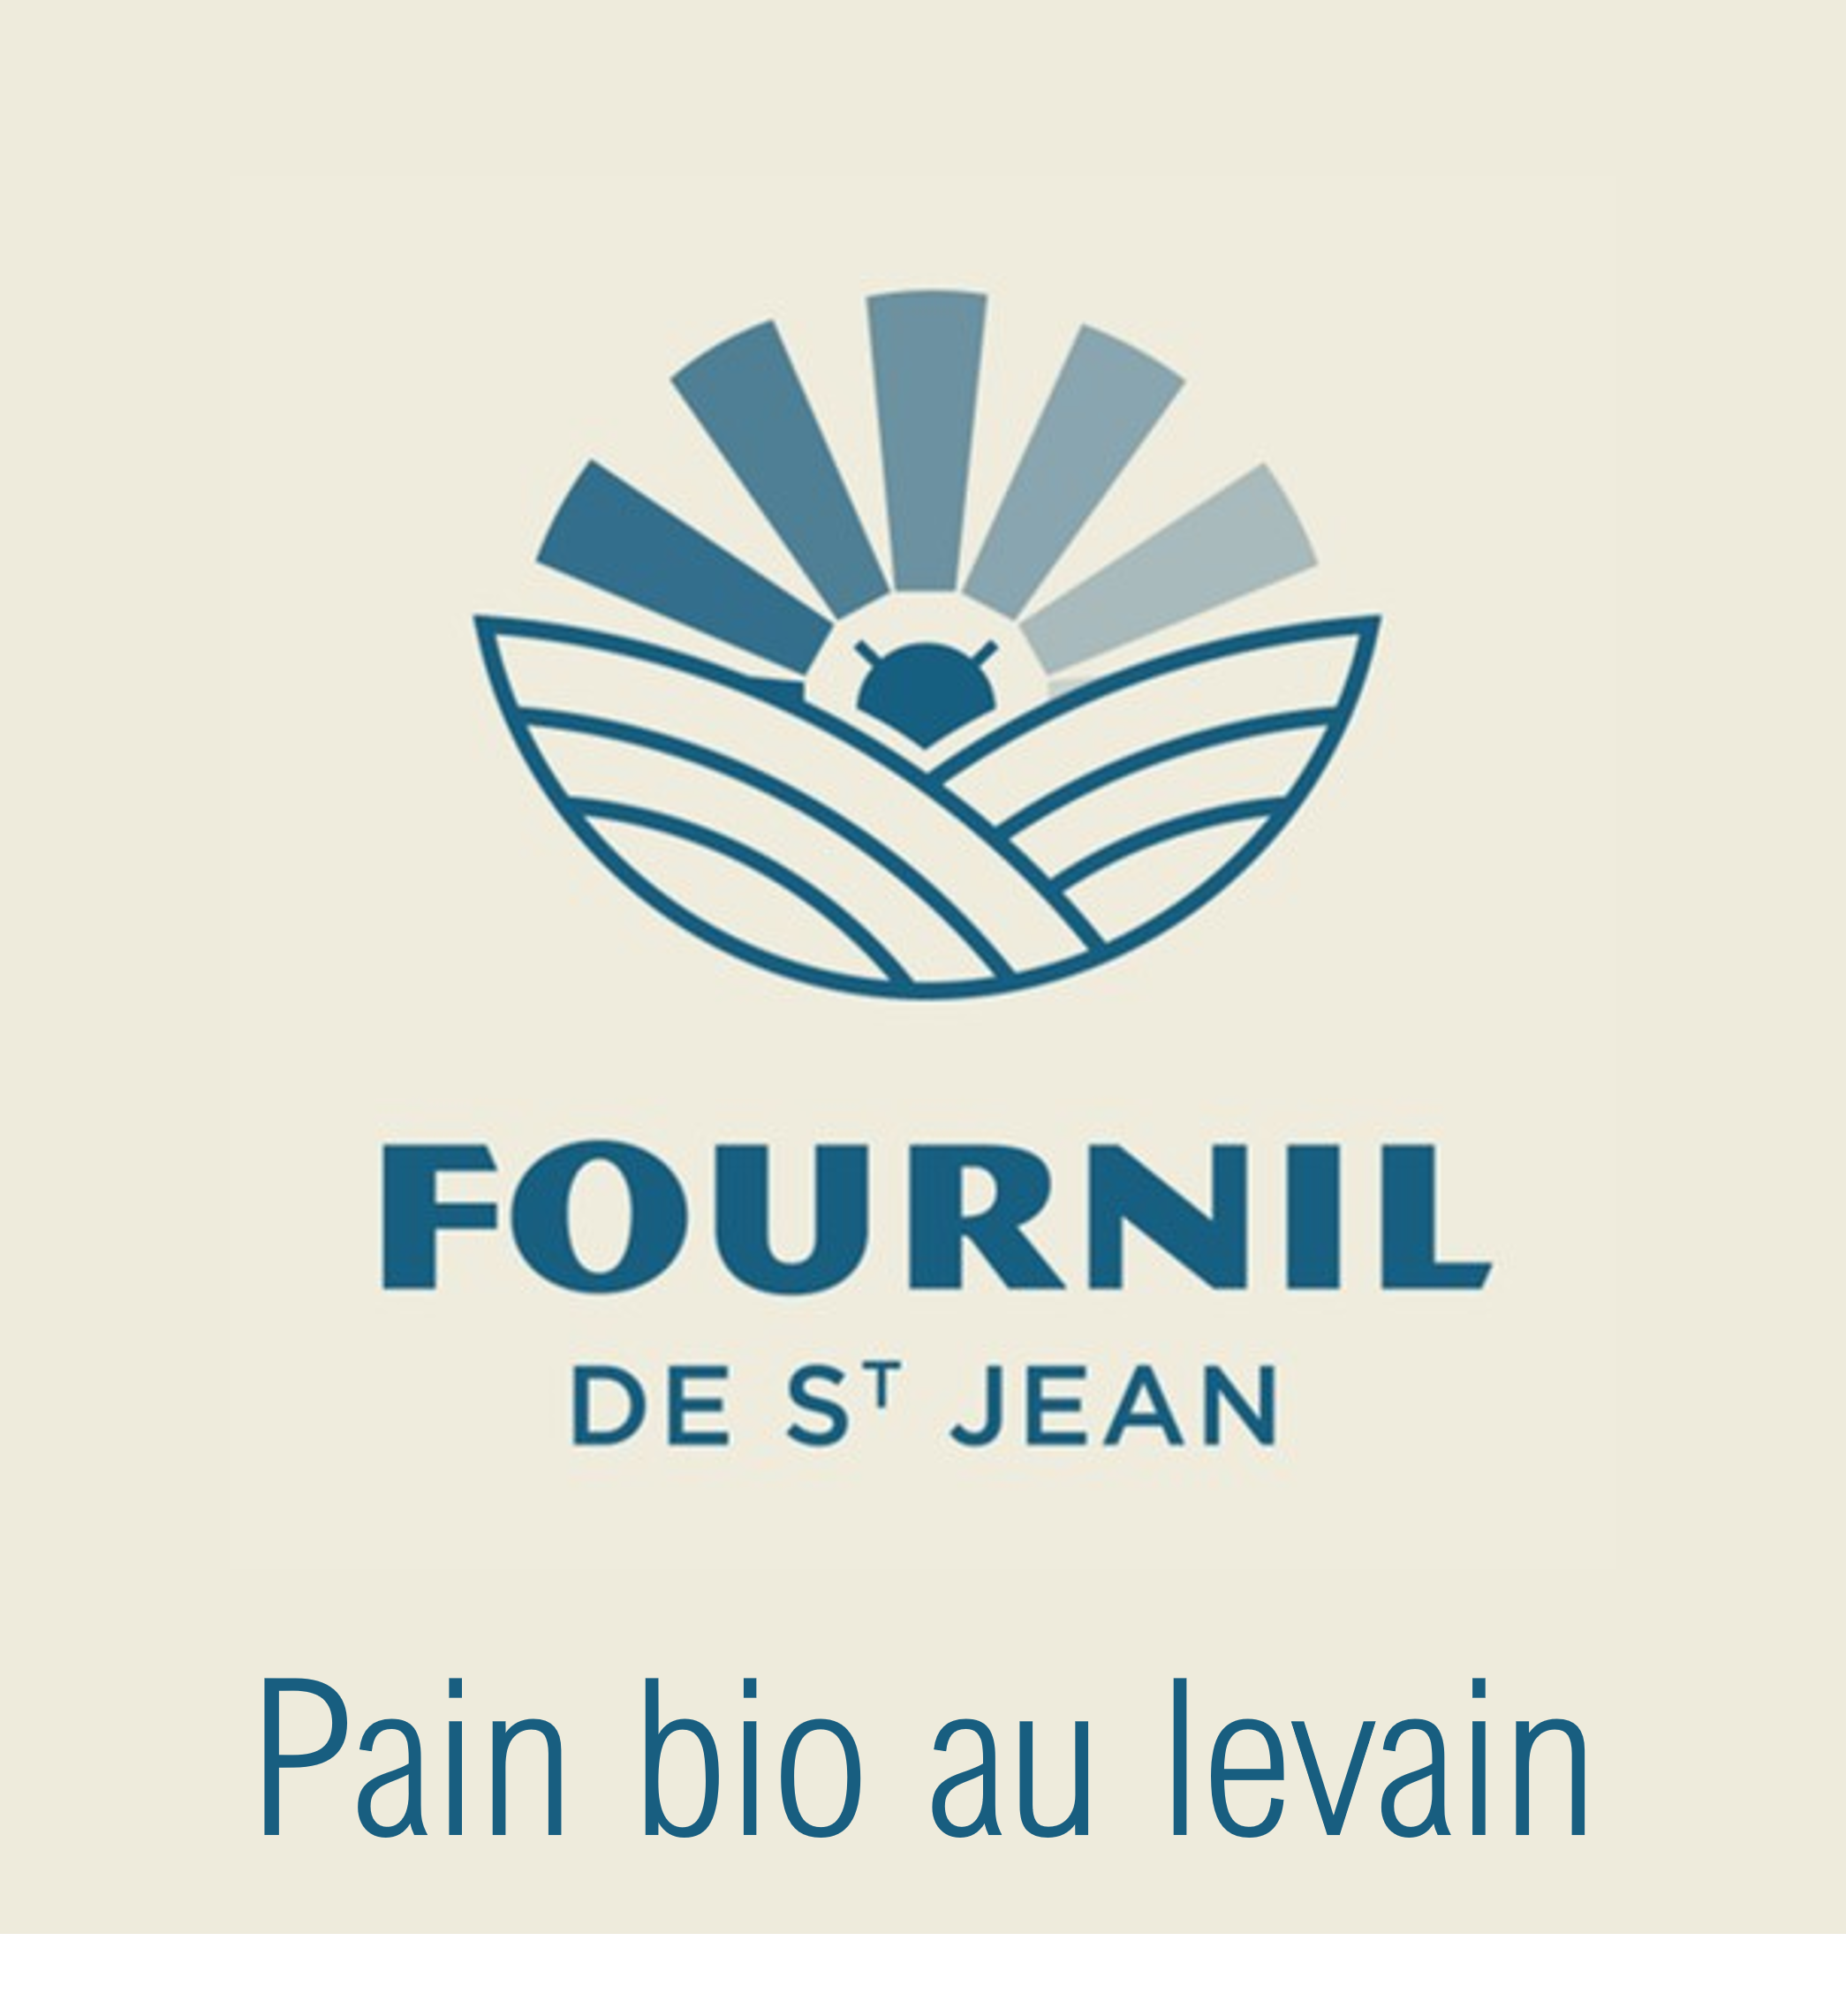 Fournil de St Jean